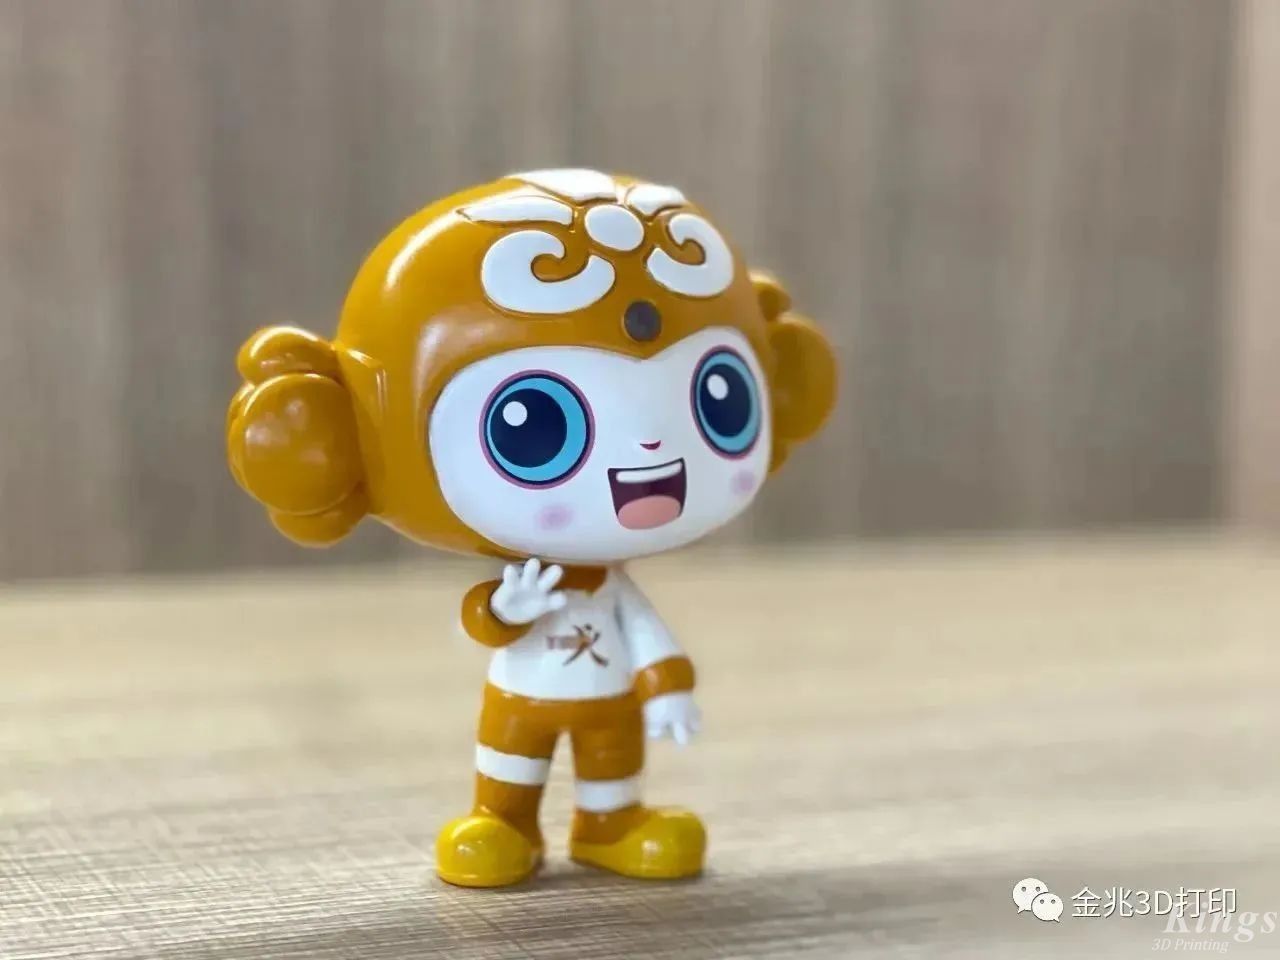 c7(中国)官网首页三维获官方独家授权的嘉兴十运会吉祥物3D打印版正在限量热卖中，欢迎预定选购